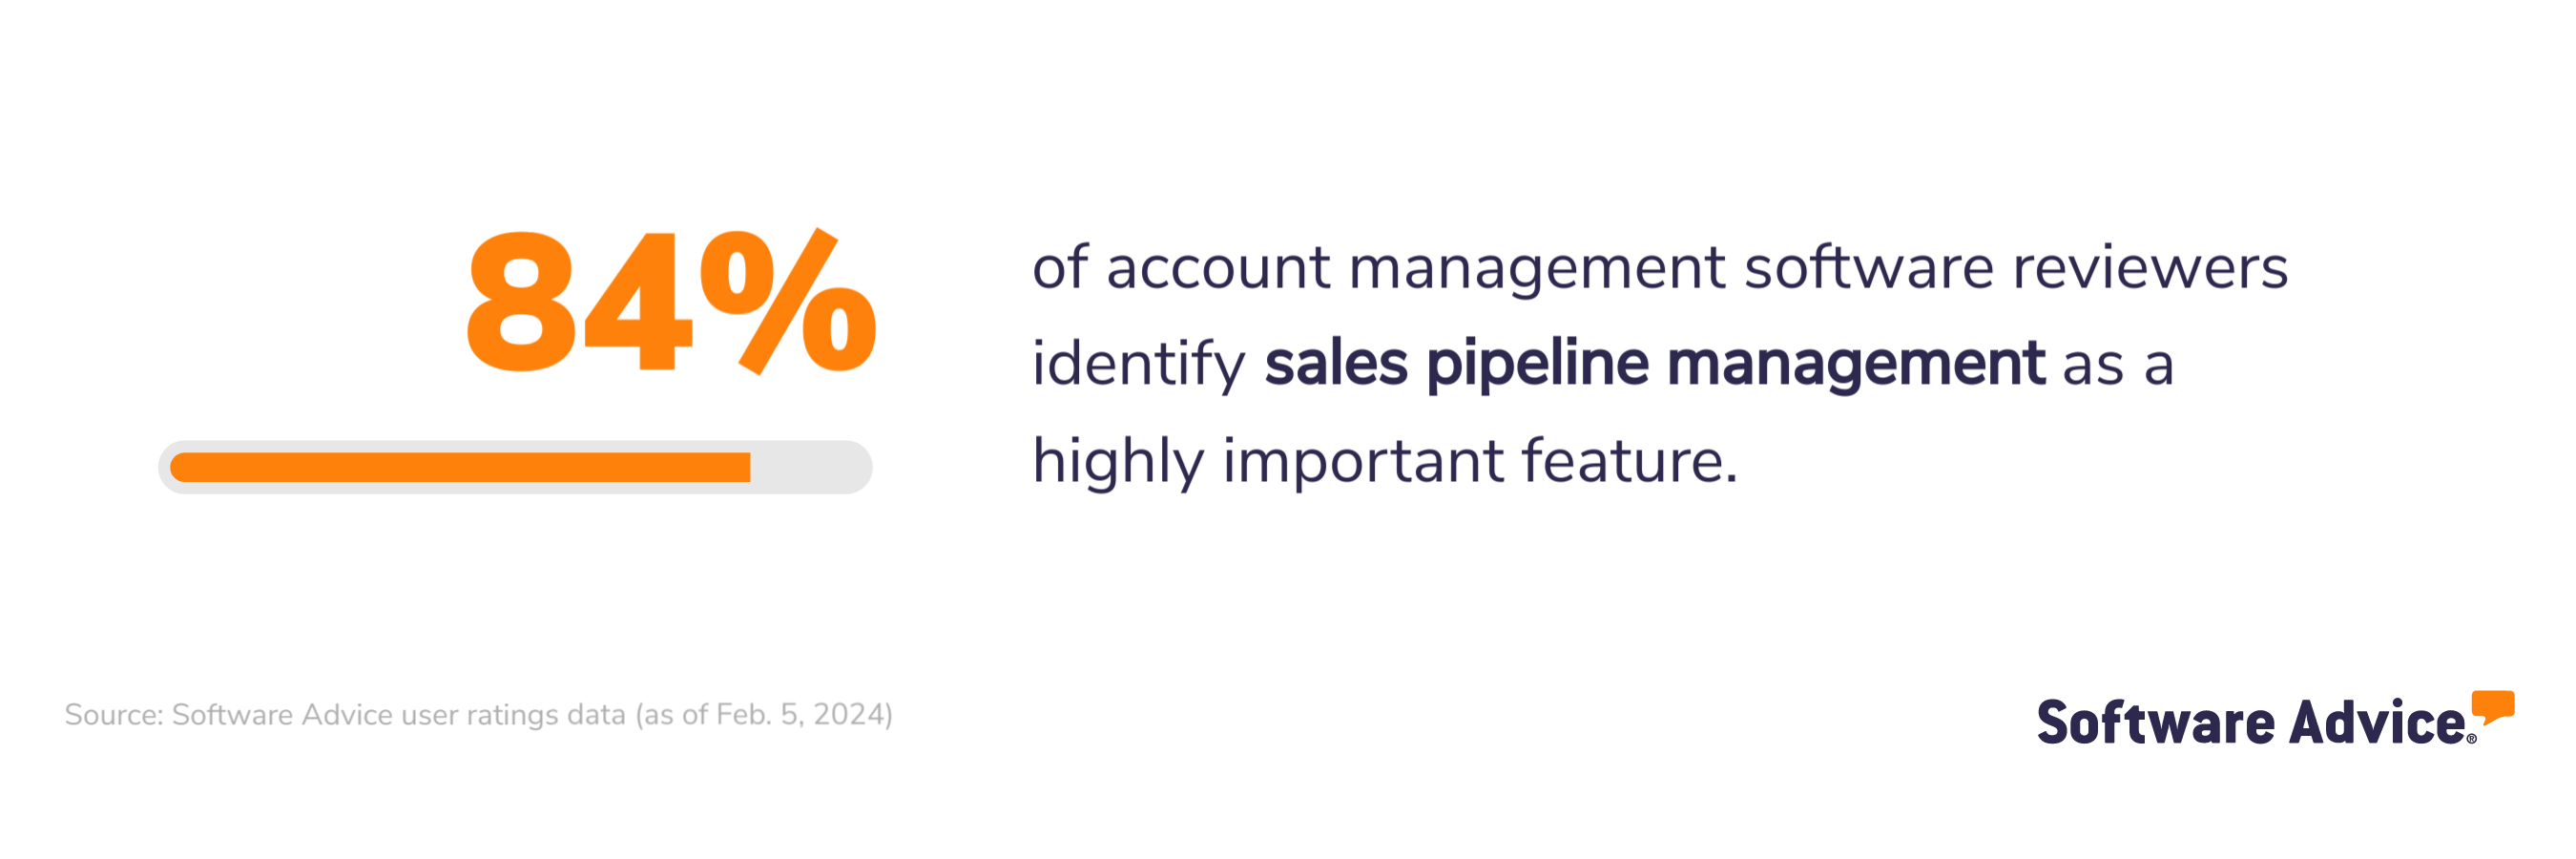 Sales pipeline management feature of account management